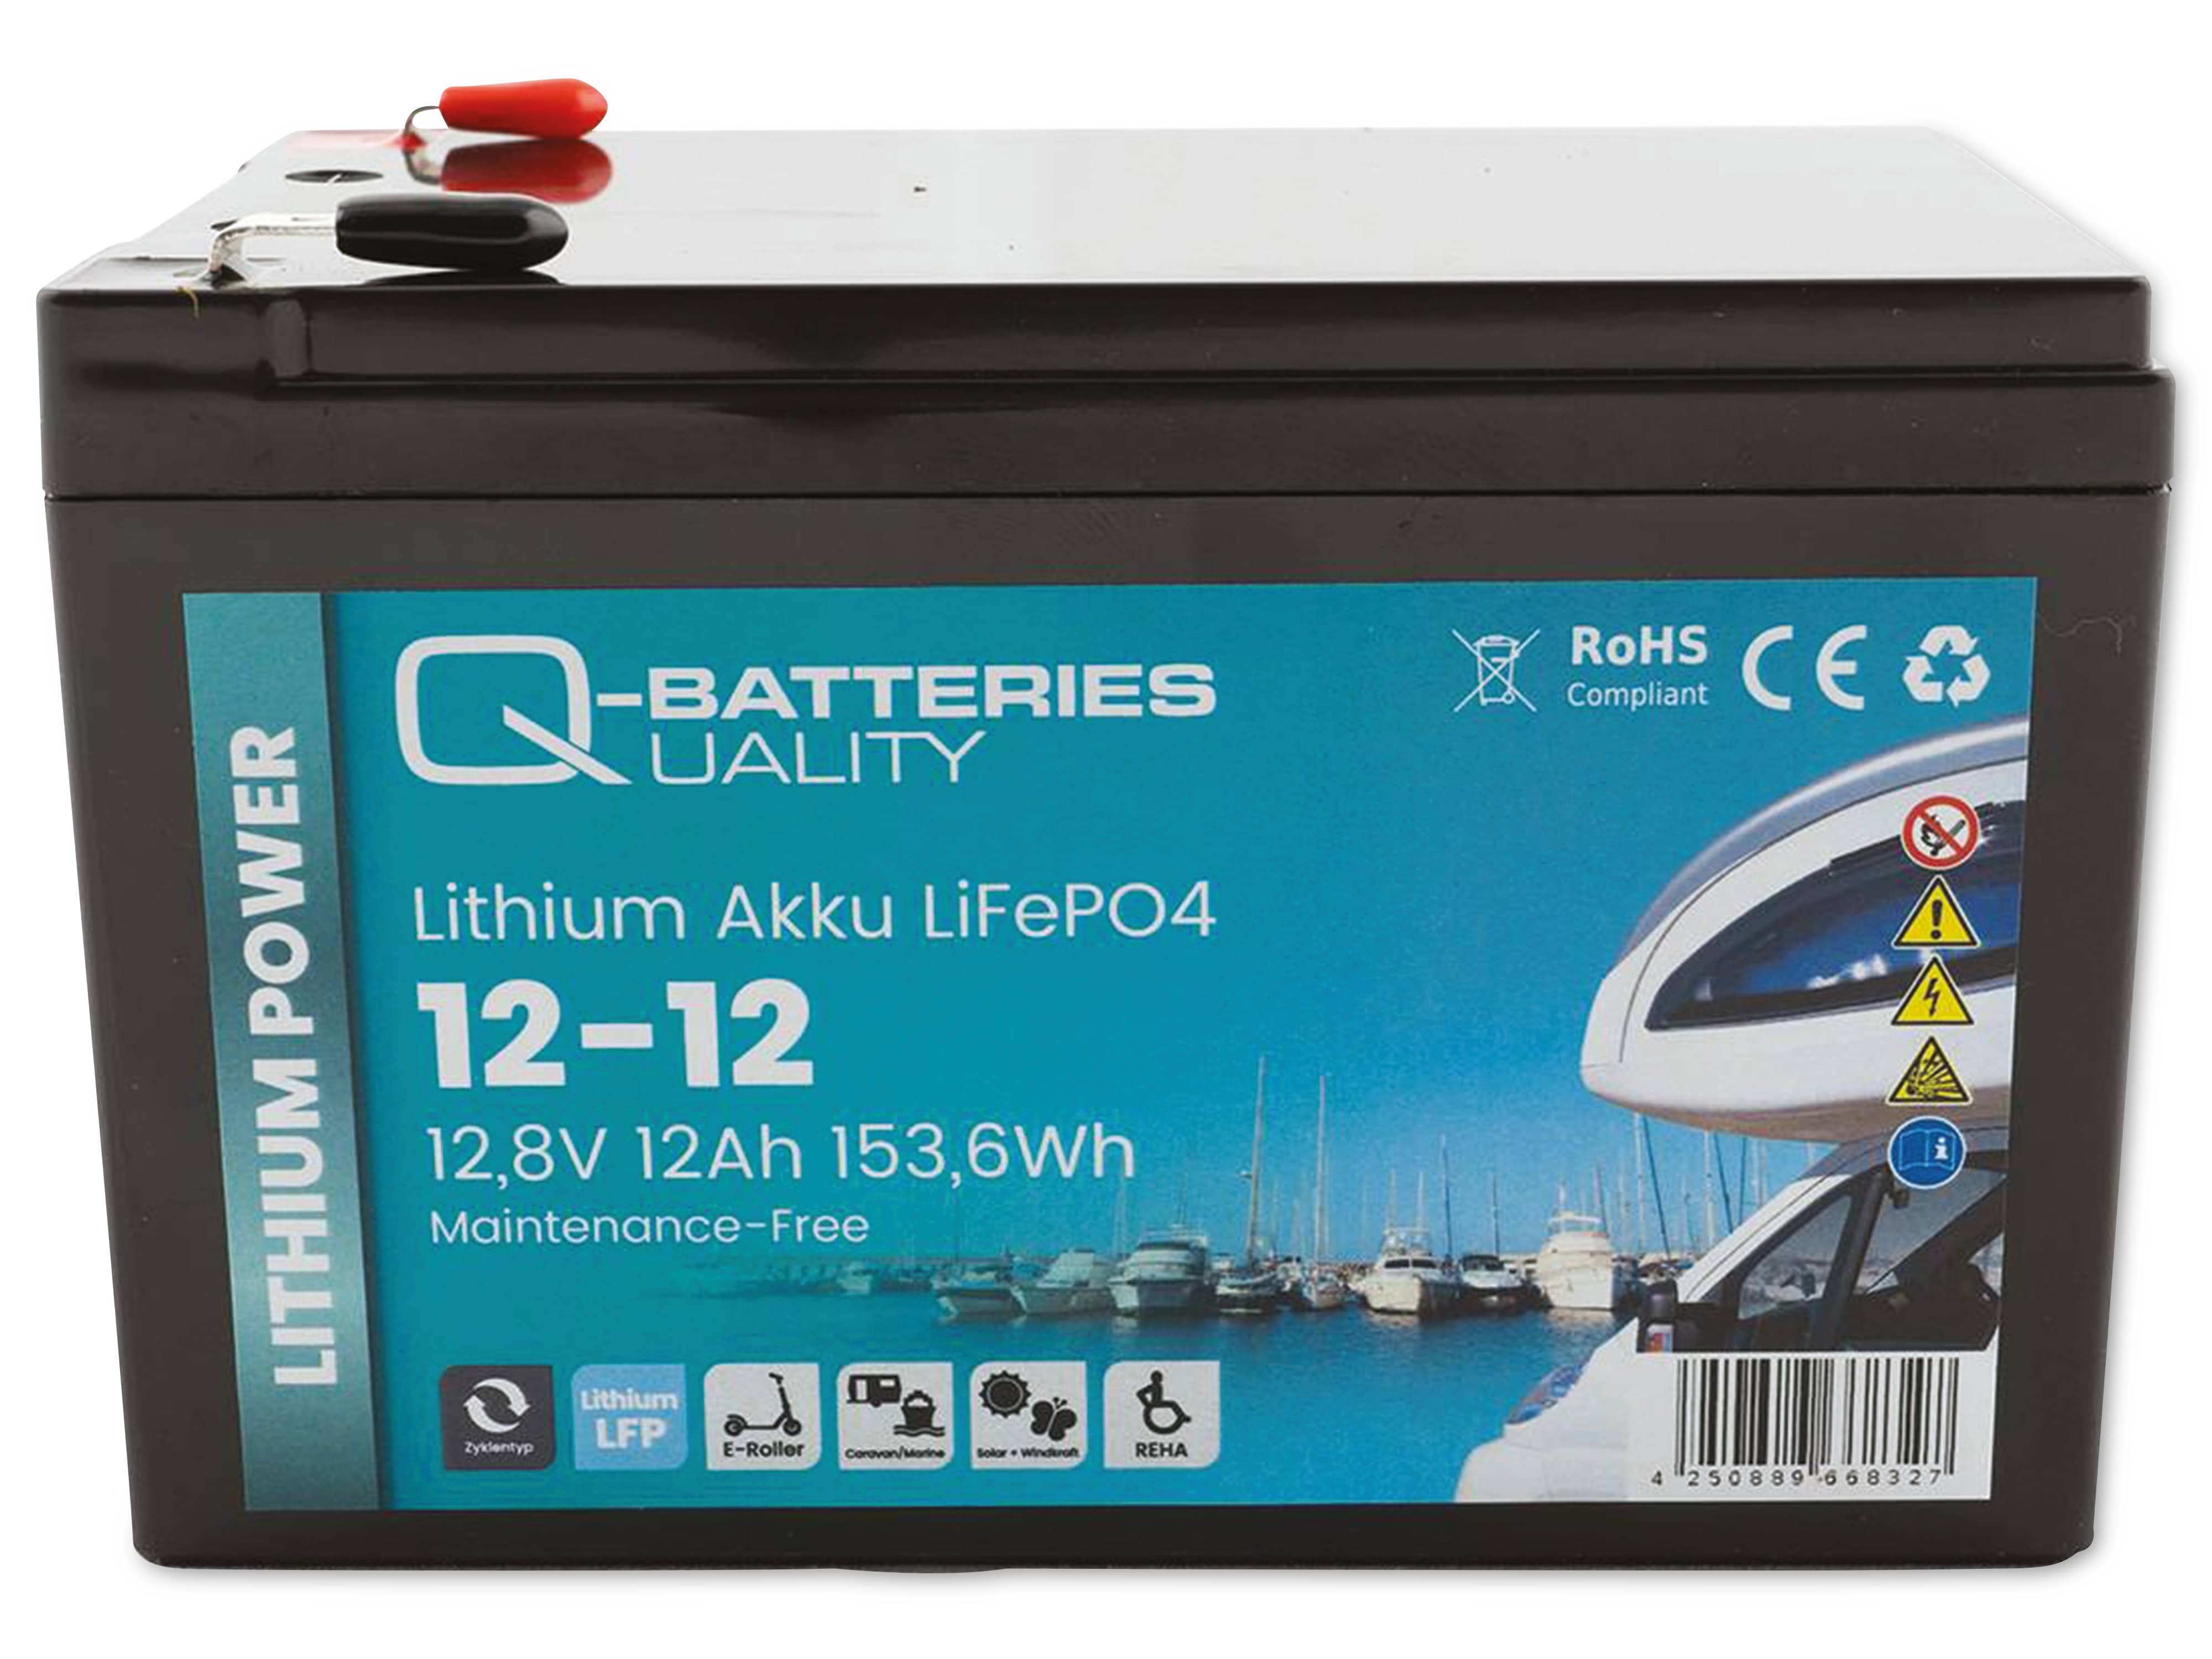 Q-BATTERIES Lithium Akku 12-12 12,8V, 12Ah, 153,6Wh LiFePO4 Batterie